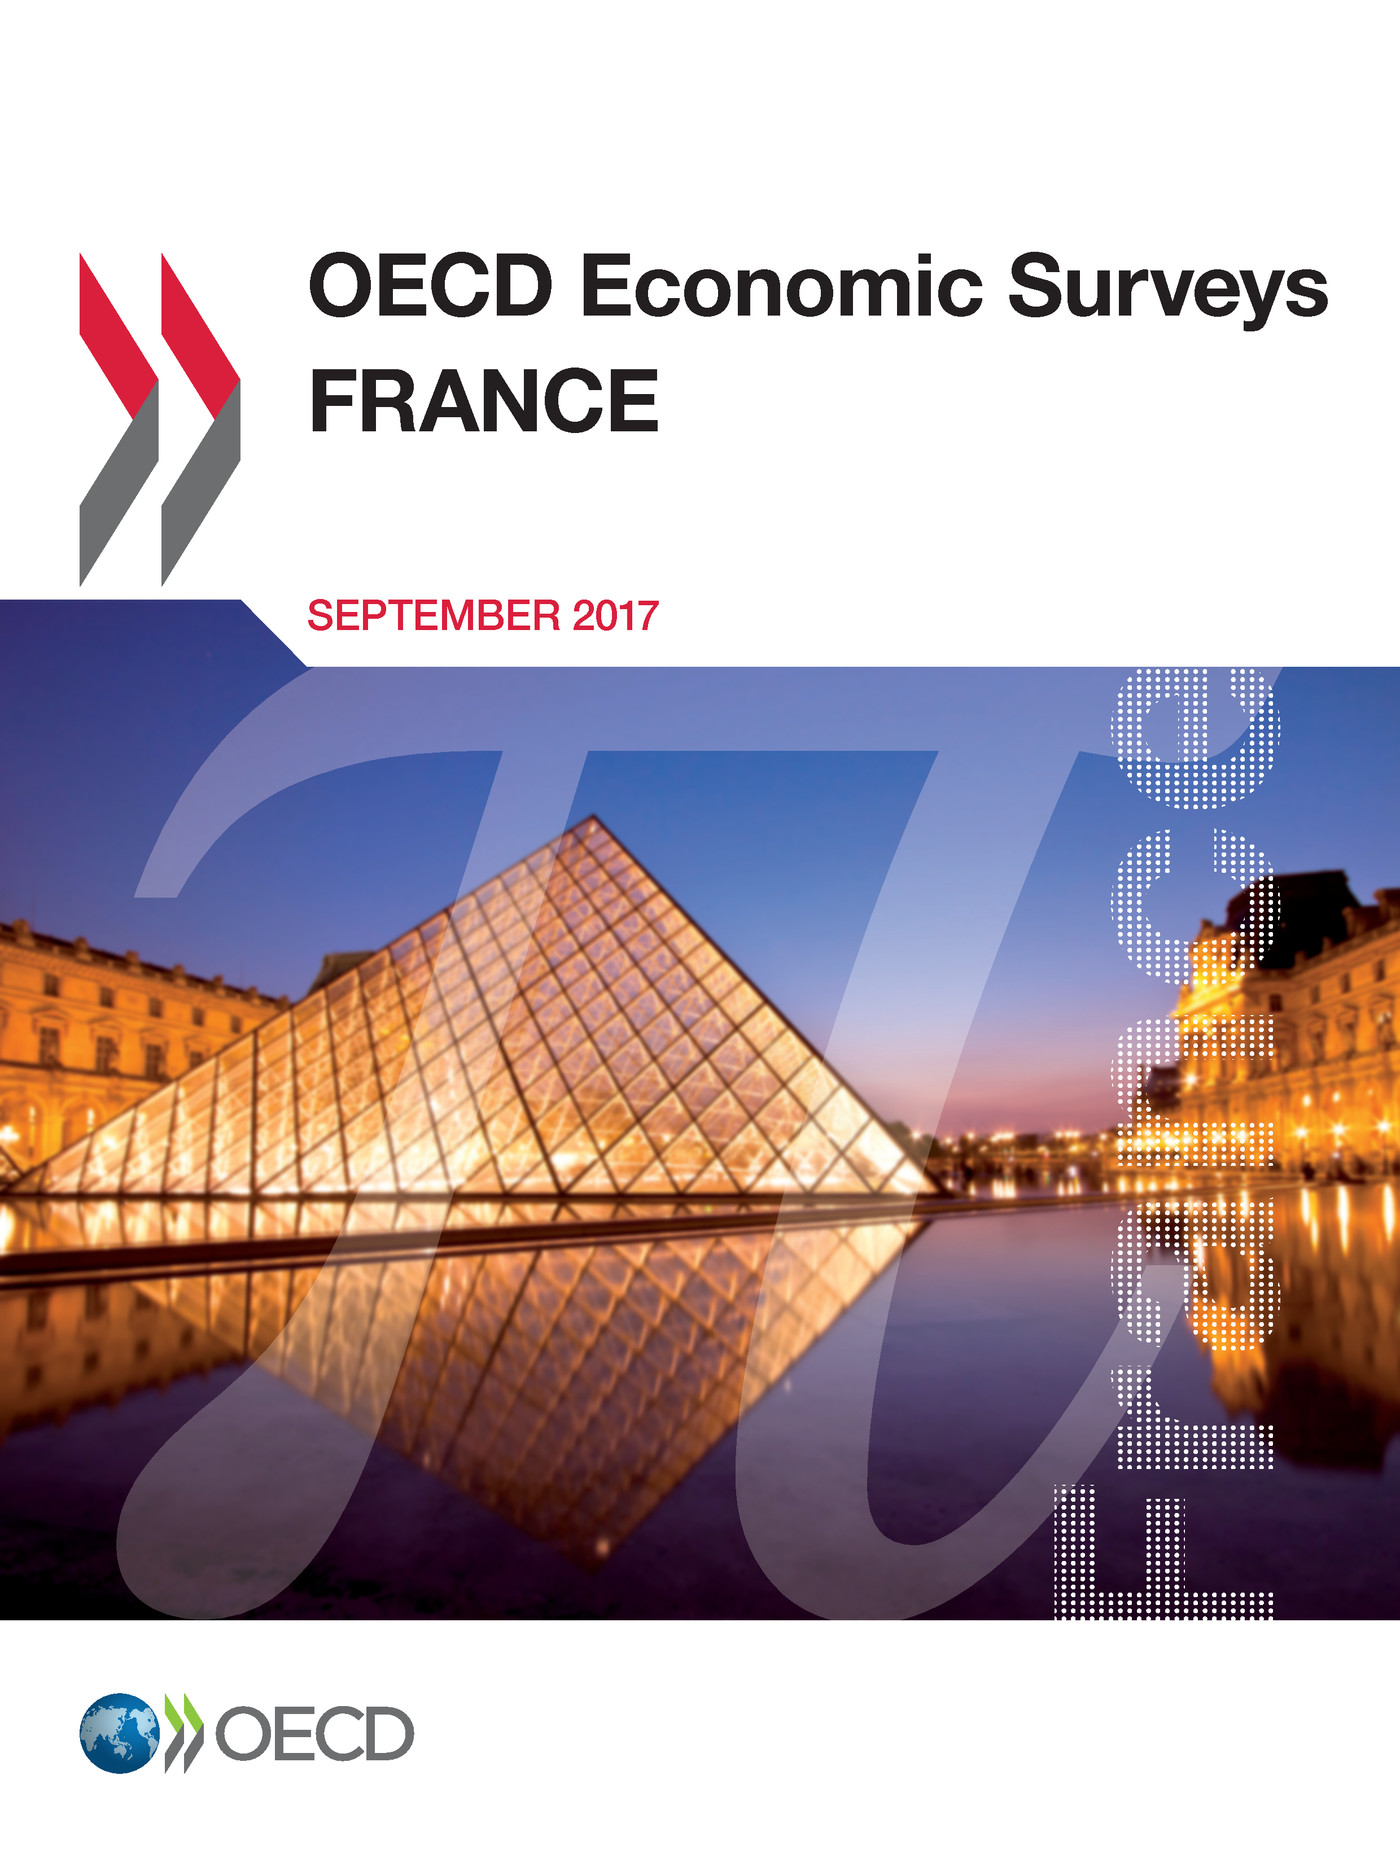 OECD Economic Surveys: France 2017 -  Collectif - OCDE / OECD